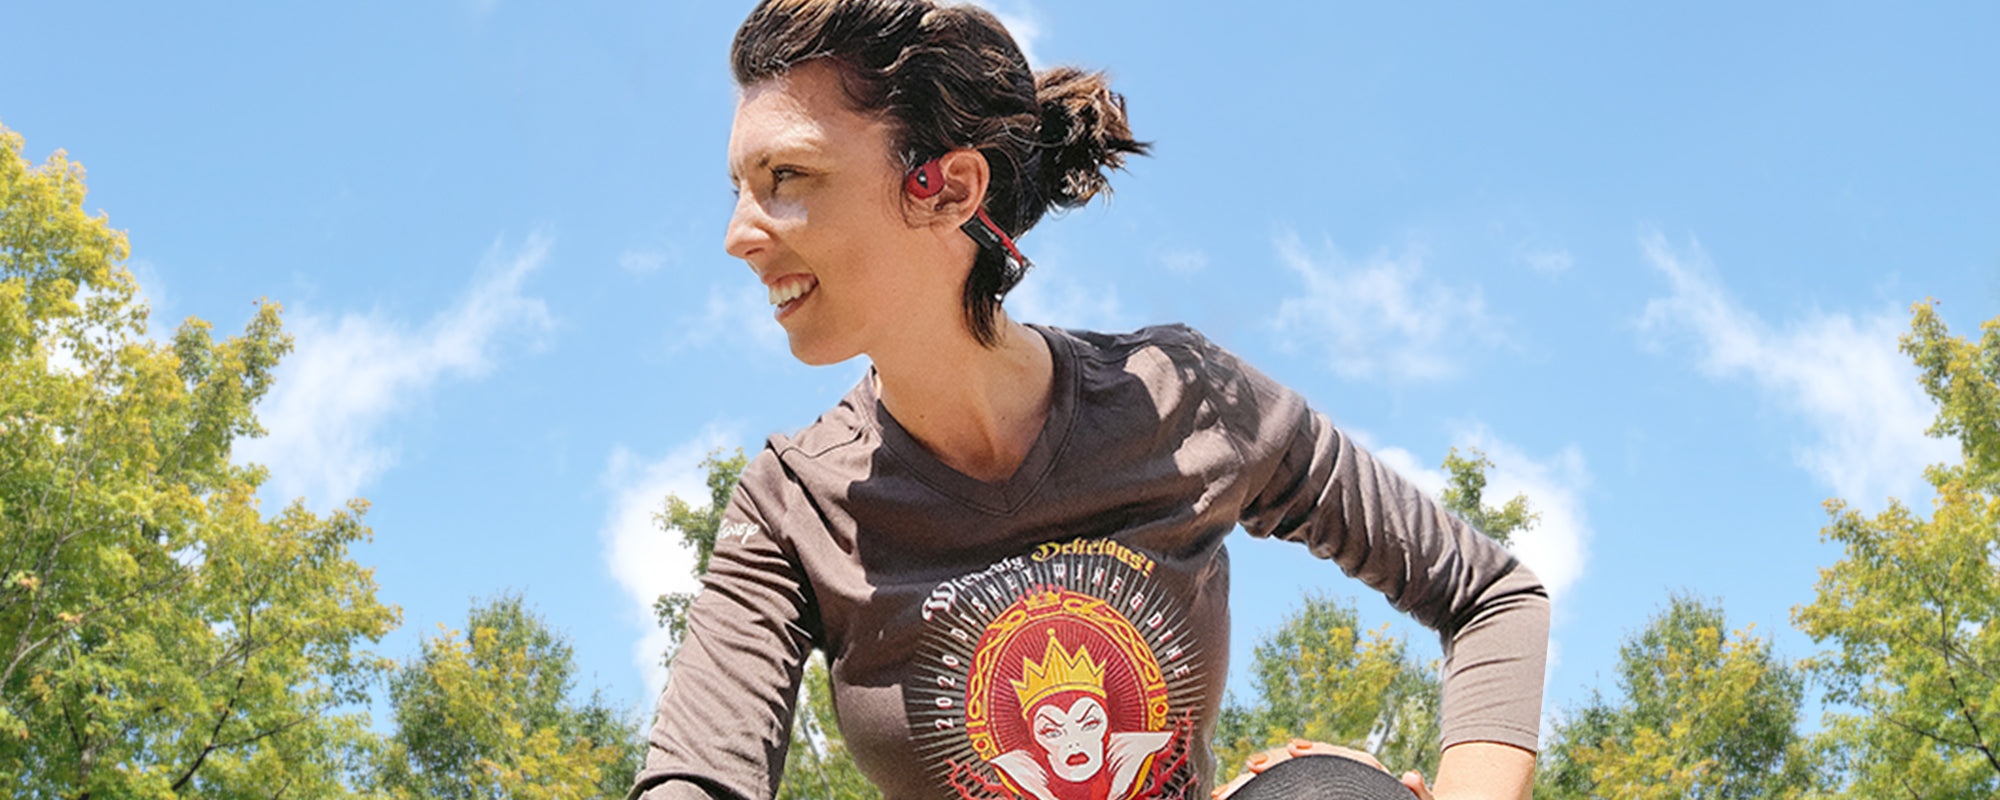 Woman in runDisney shirt wearing AfterShokz Air headphones